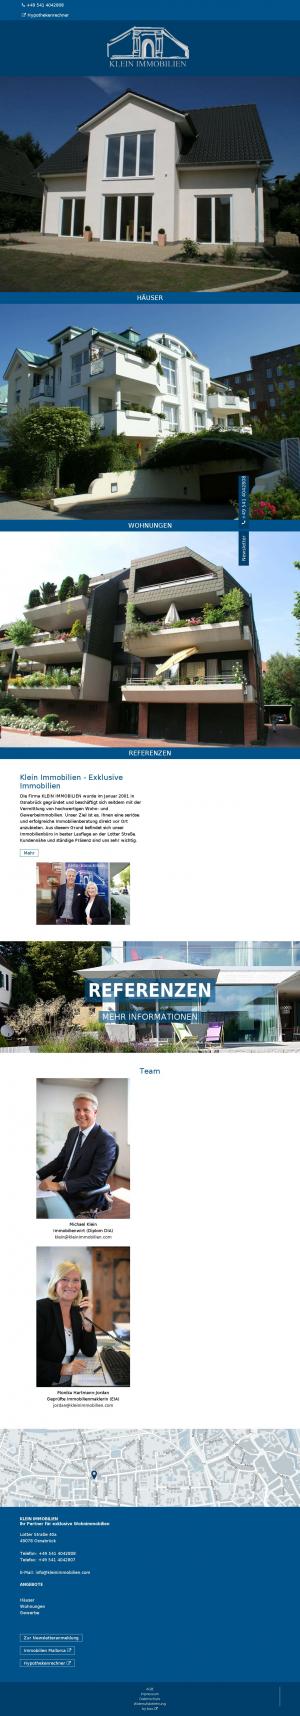 www.kleinimmobilien.com